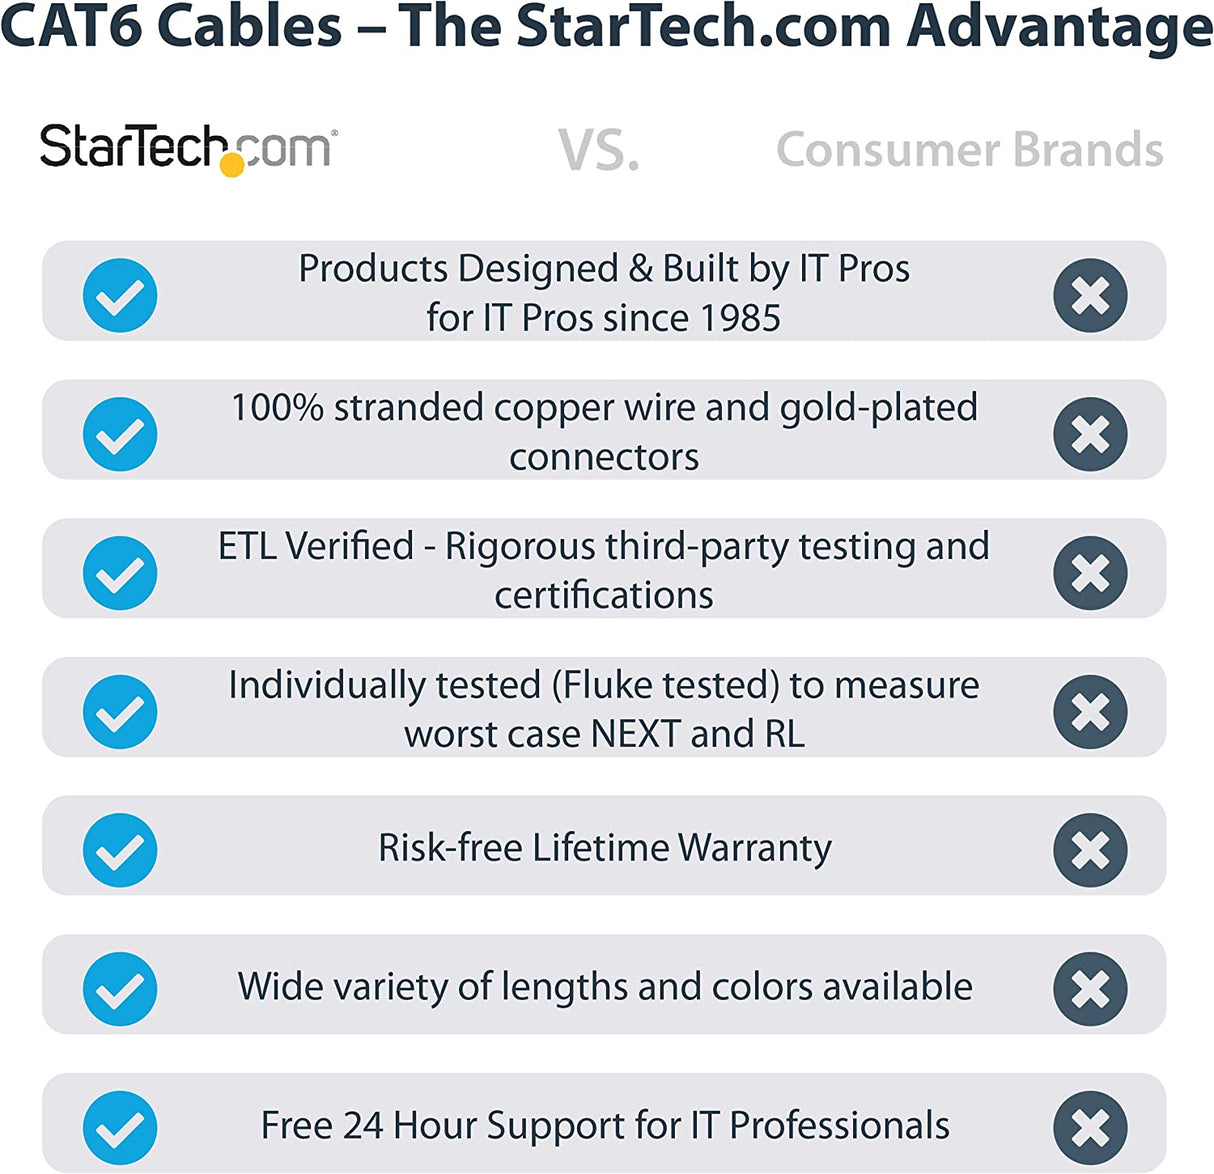 Startech 6ft (1.8m) CAT6 Ethernet Cable - LSZH (Low Smoke Zero Halogen) - 10 Gigabit 650MHz 100W PoE RJ45 UTP Network Patch Cord Snagless w/Strain Relief - Gray CAT 6, ETL Verified (N6LPATCH6GR) 6 ft Gray